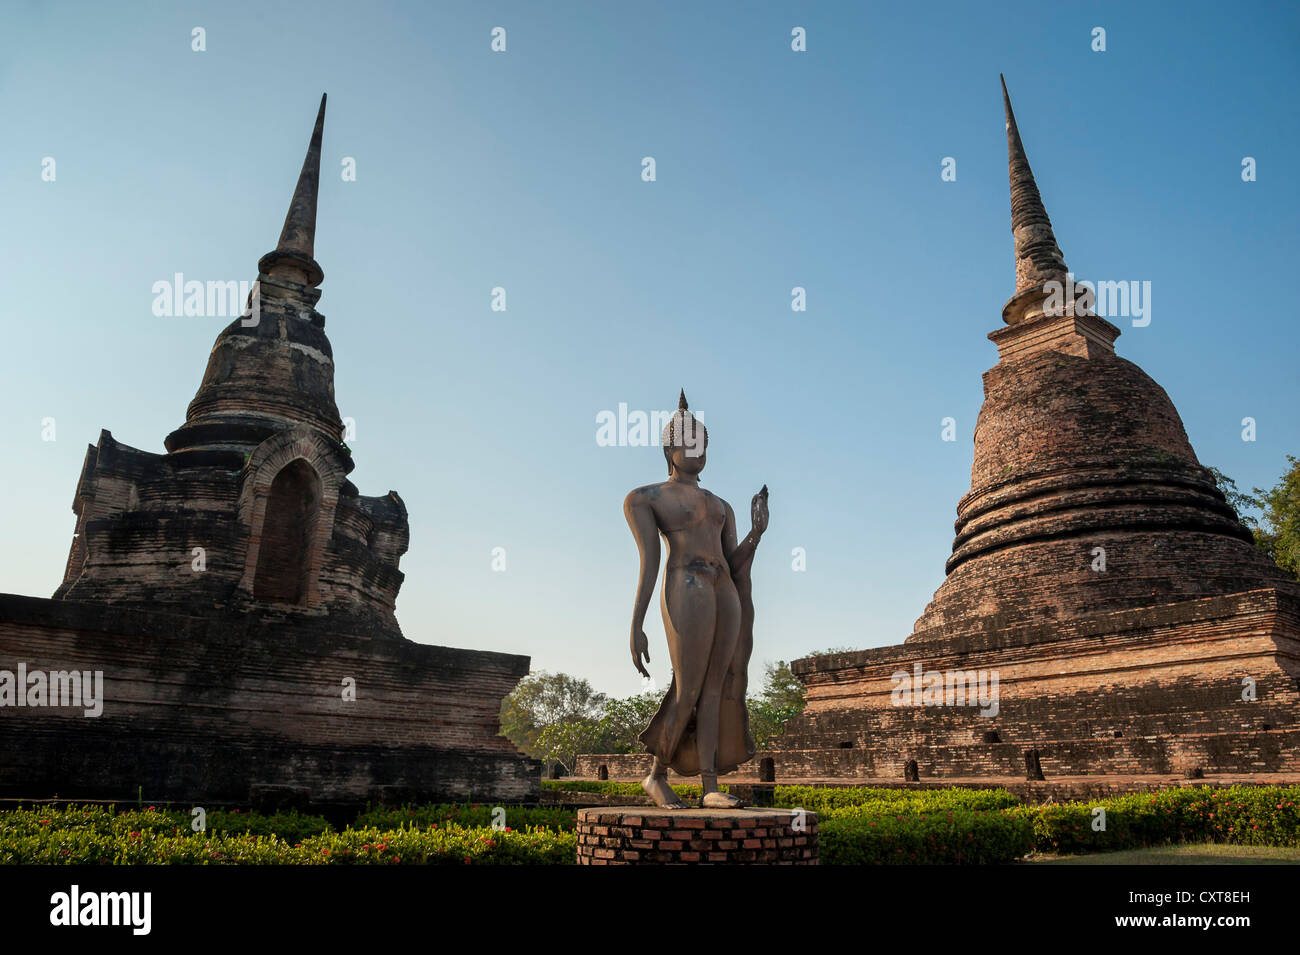 Walking Buddha statue in Wat Sa Si or Sra Sri temple, Sukhothai Historical Park, UNESCO World Heritage Site, Northern Thailand Stock Photo